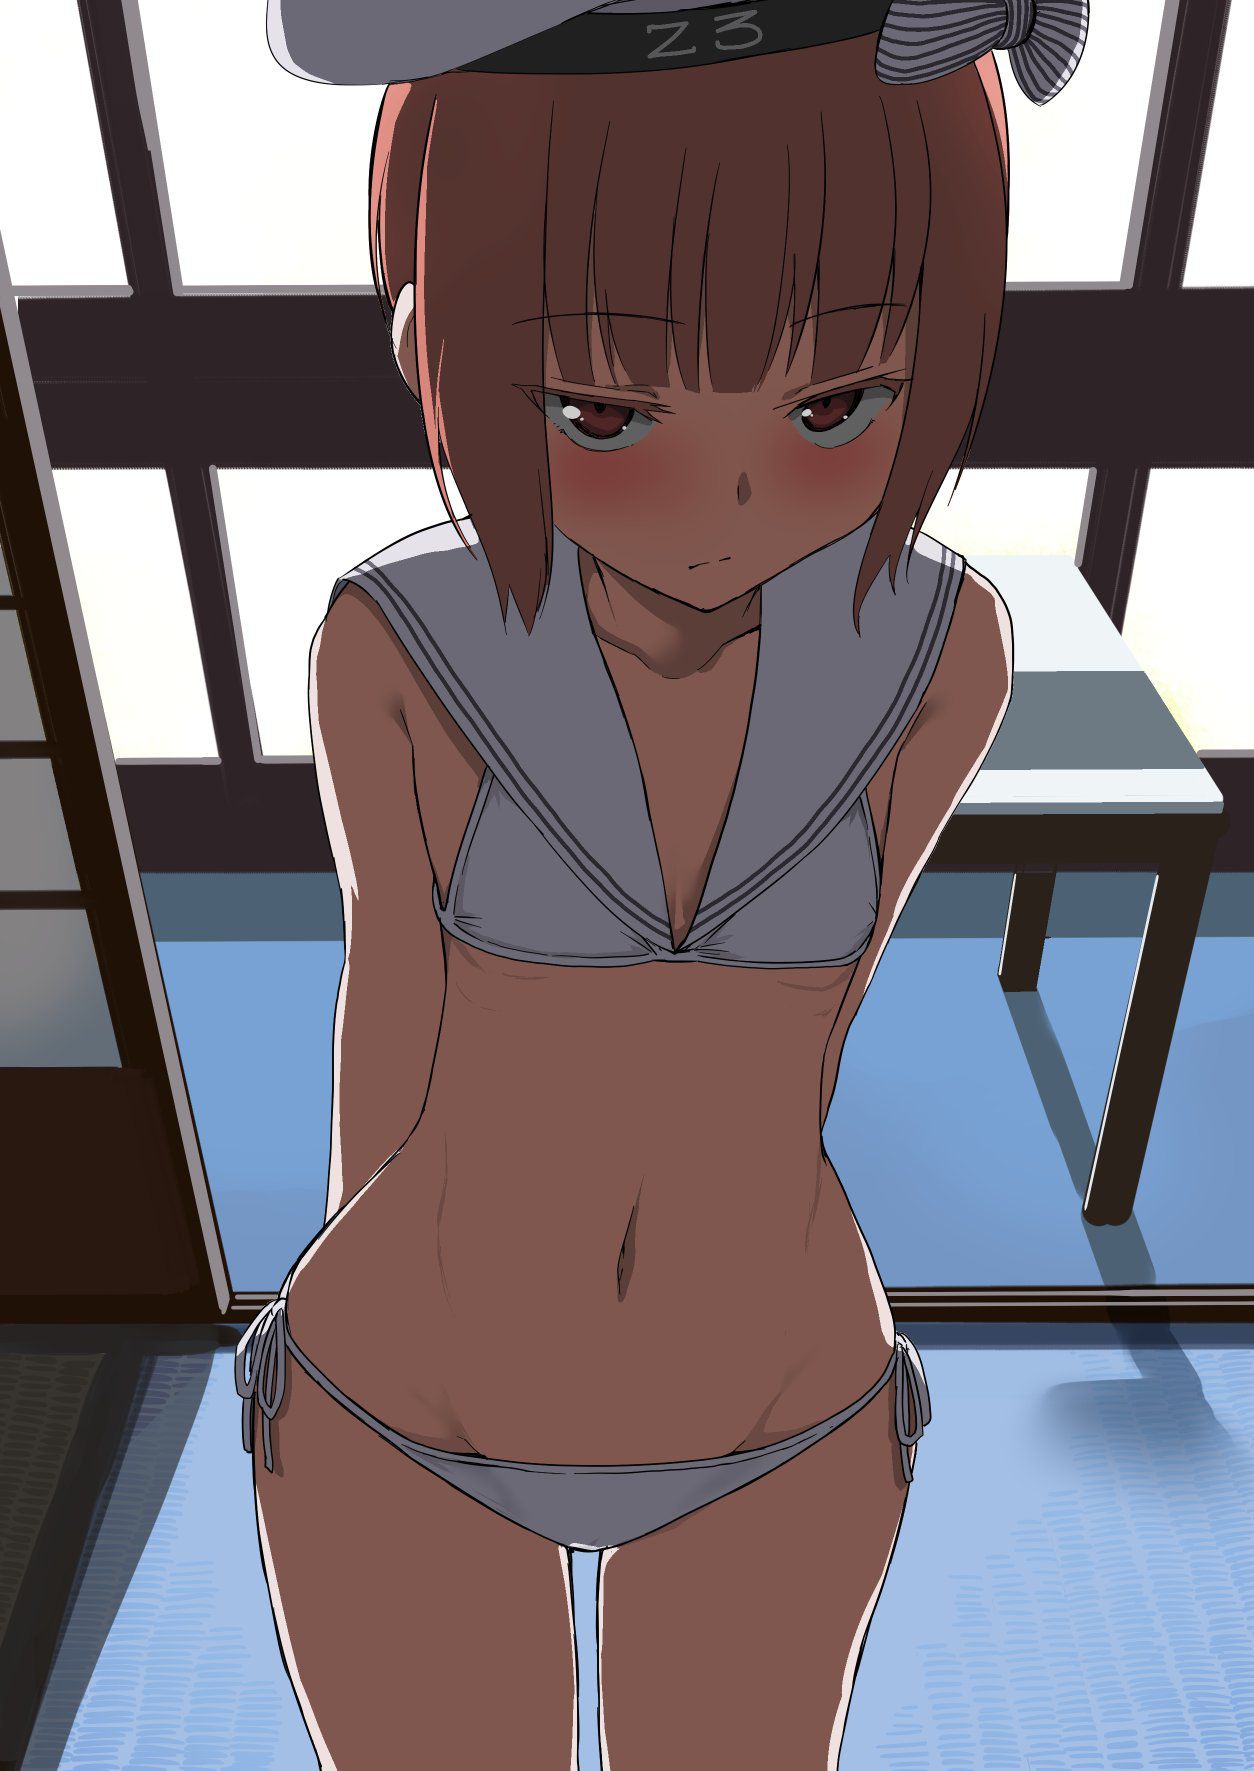 [the second, ZIP] please give me the beautiful girl image of the low leg underwear bikini! 16